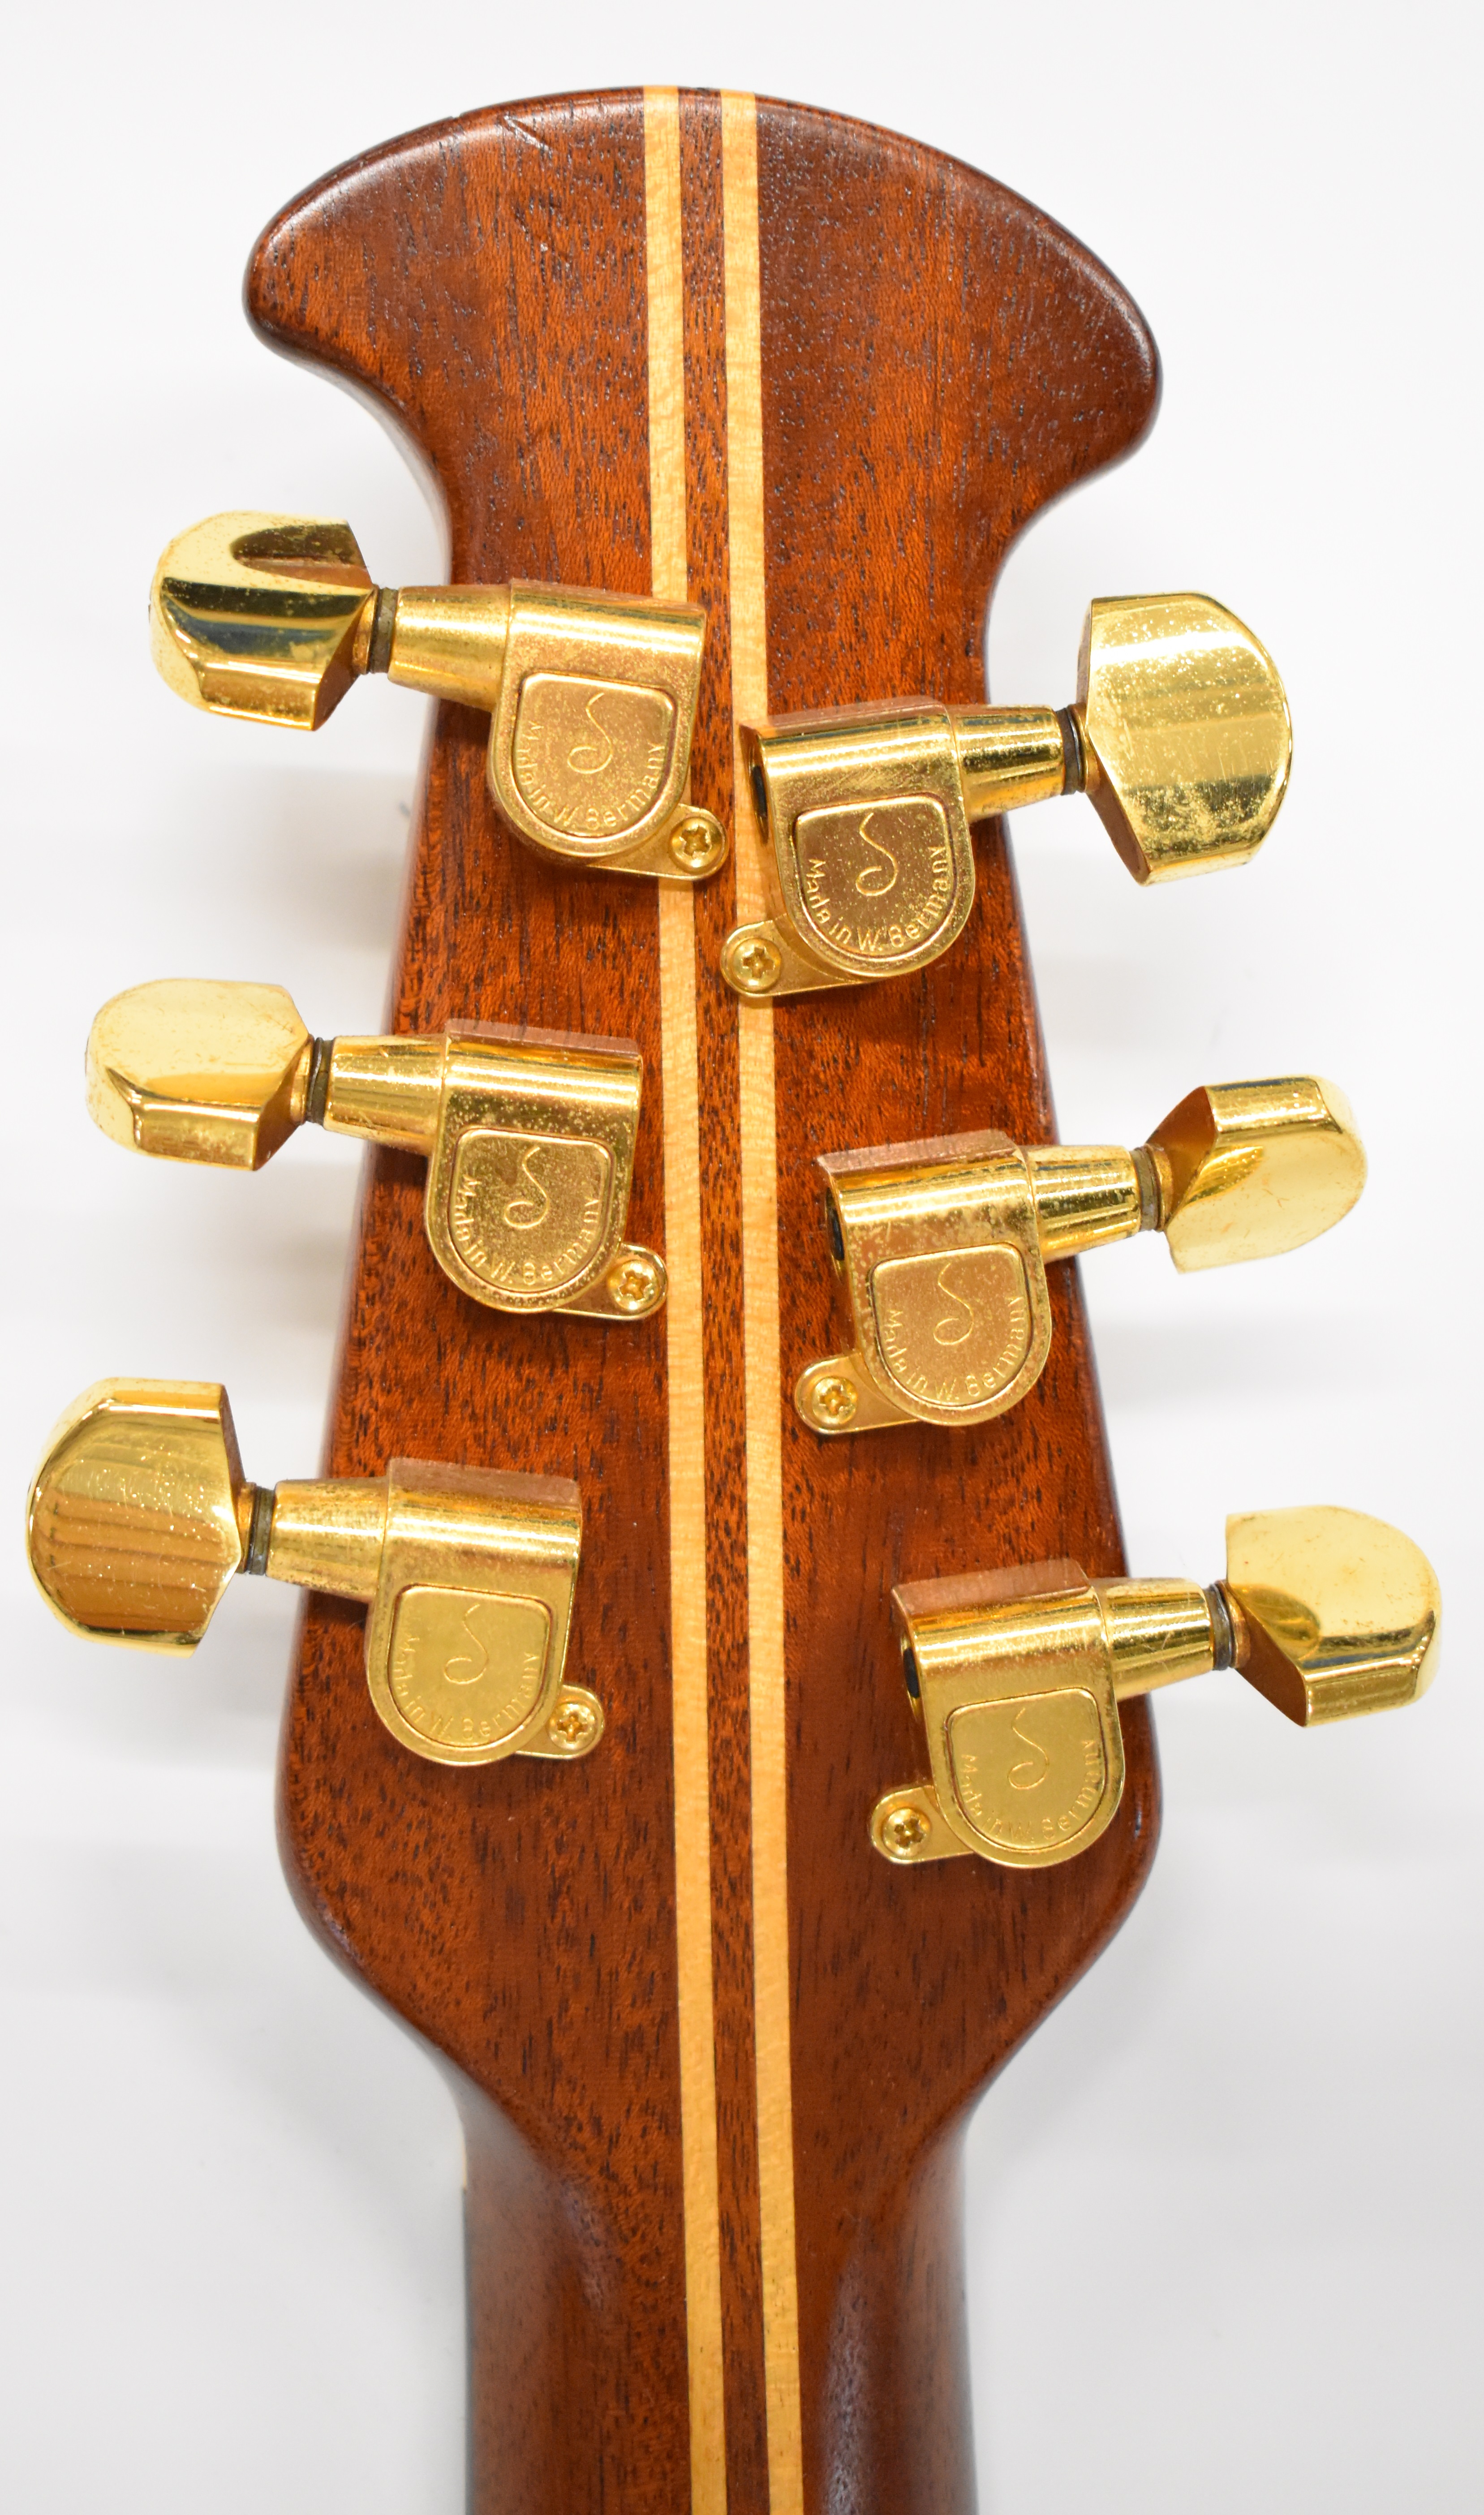 Ovation Elite electro acoustic guitar model number 1868C, with hard case. - Image 7 of 9